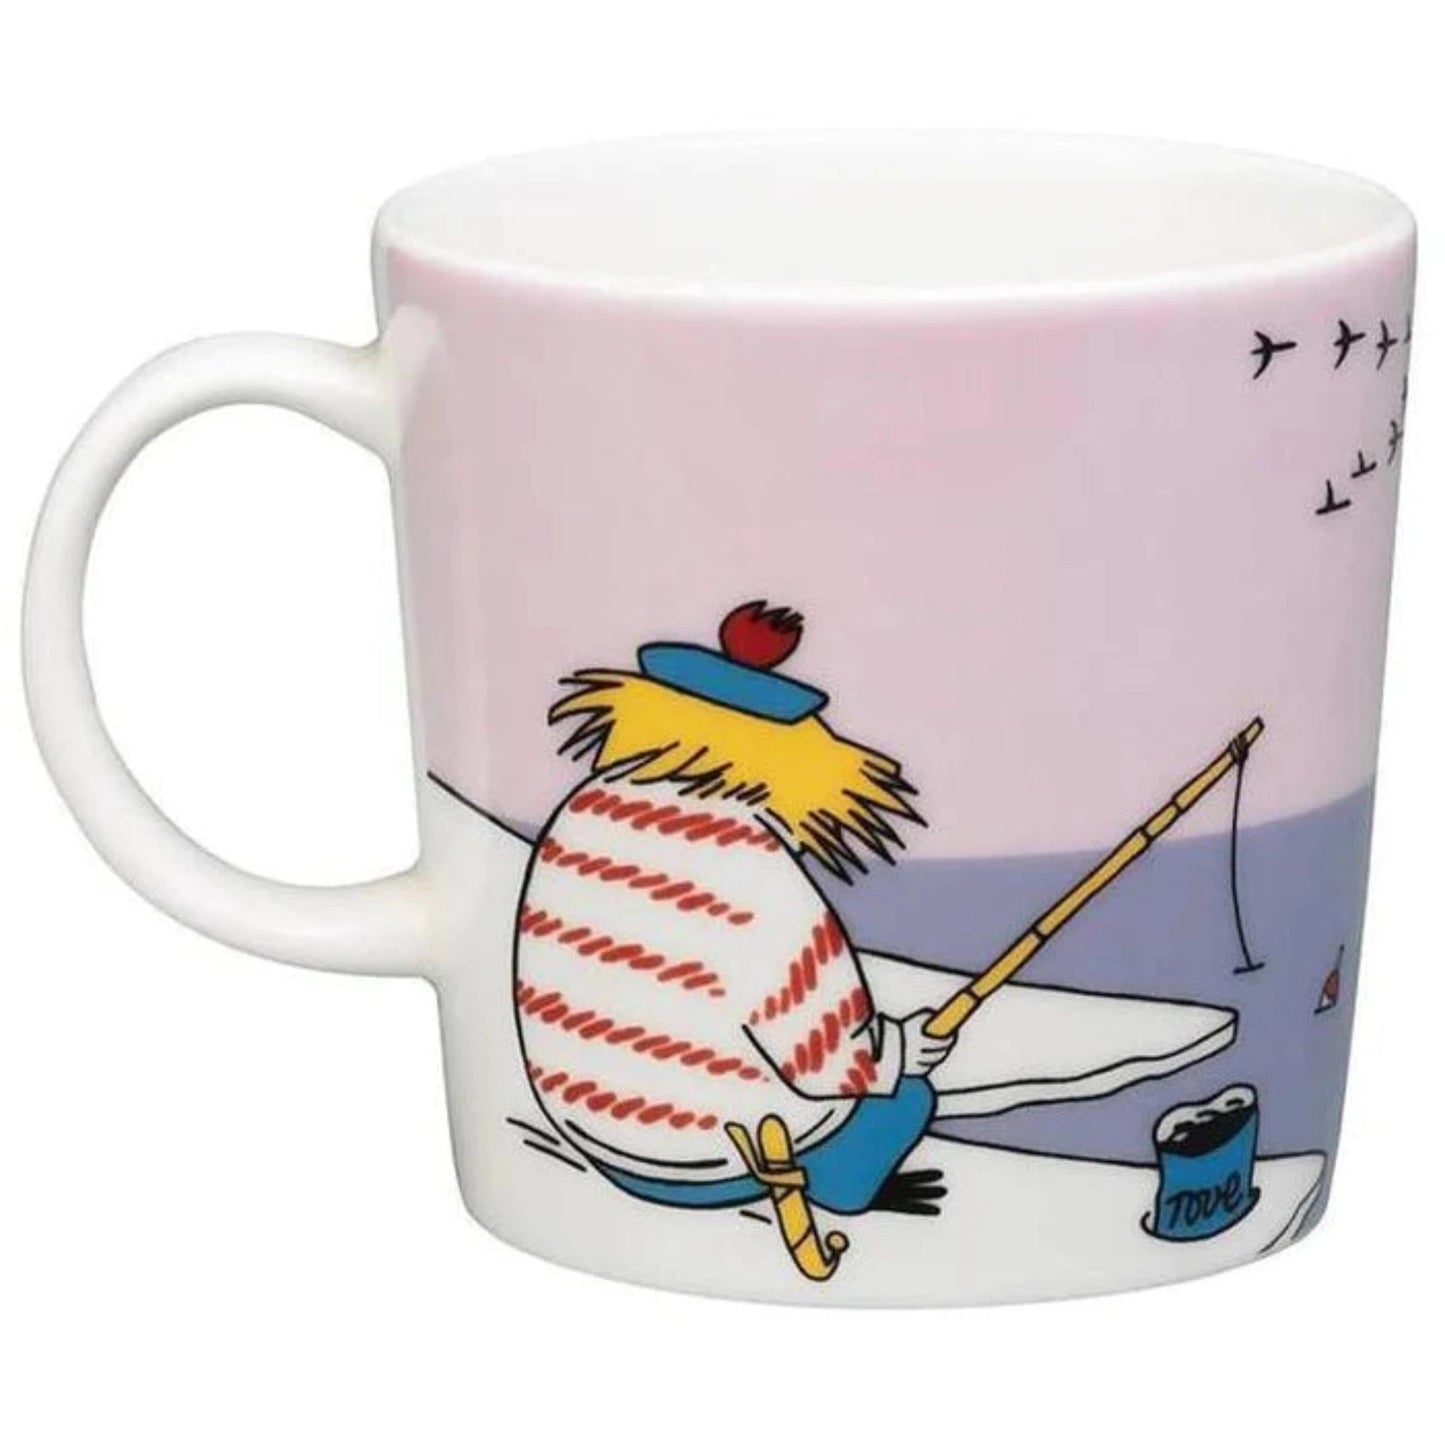 Moomin Mug by Arabia, Tooticky (4165995495489)